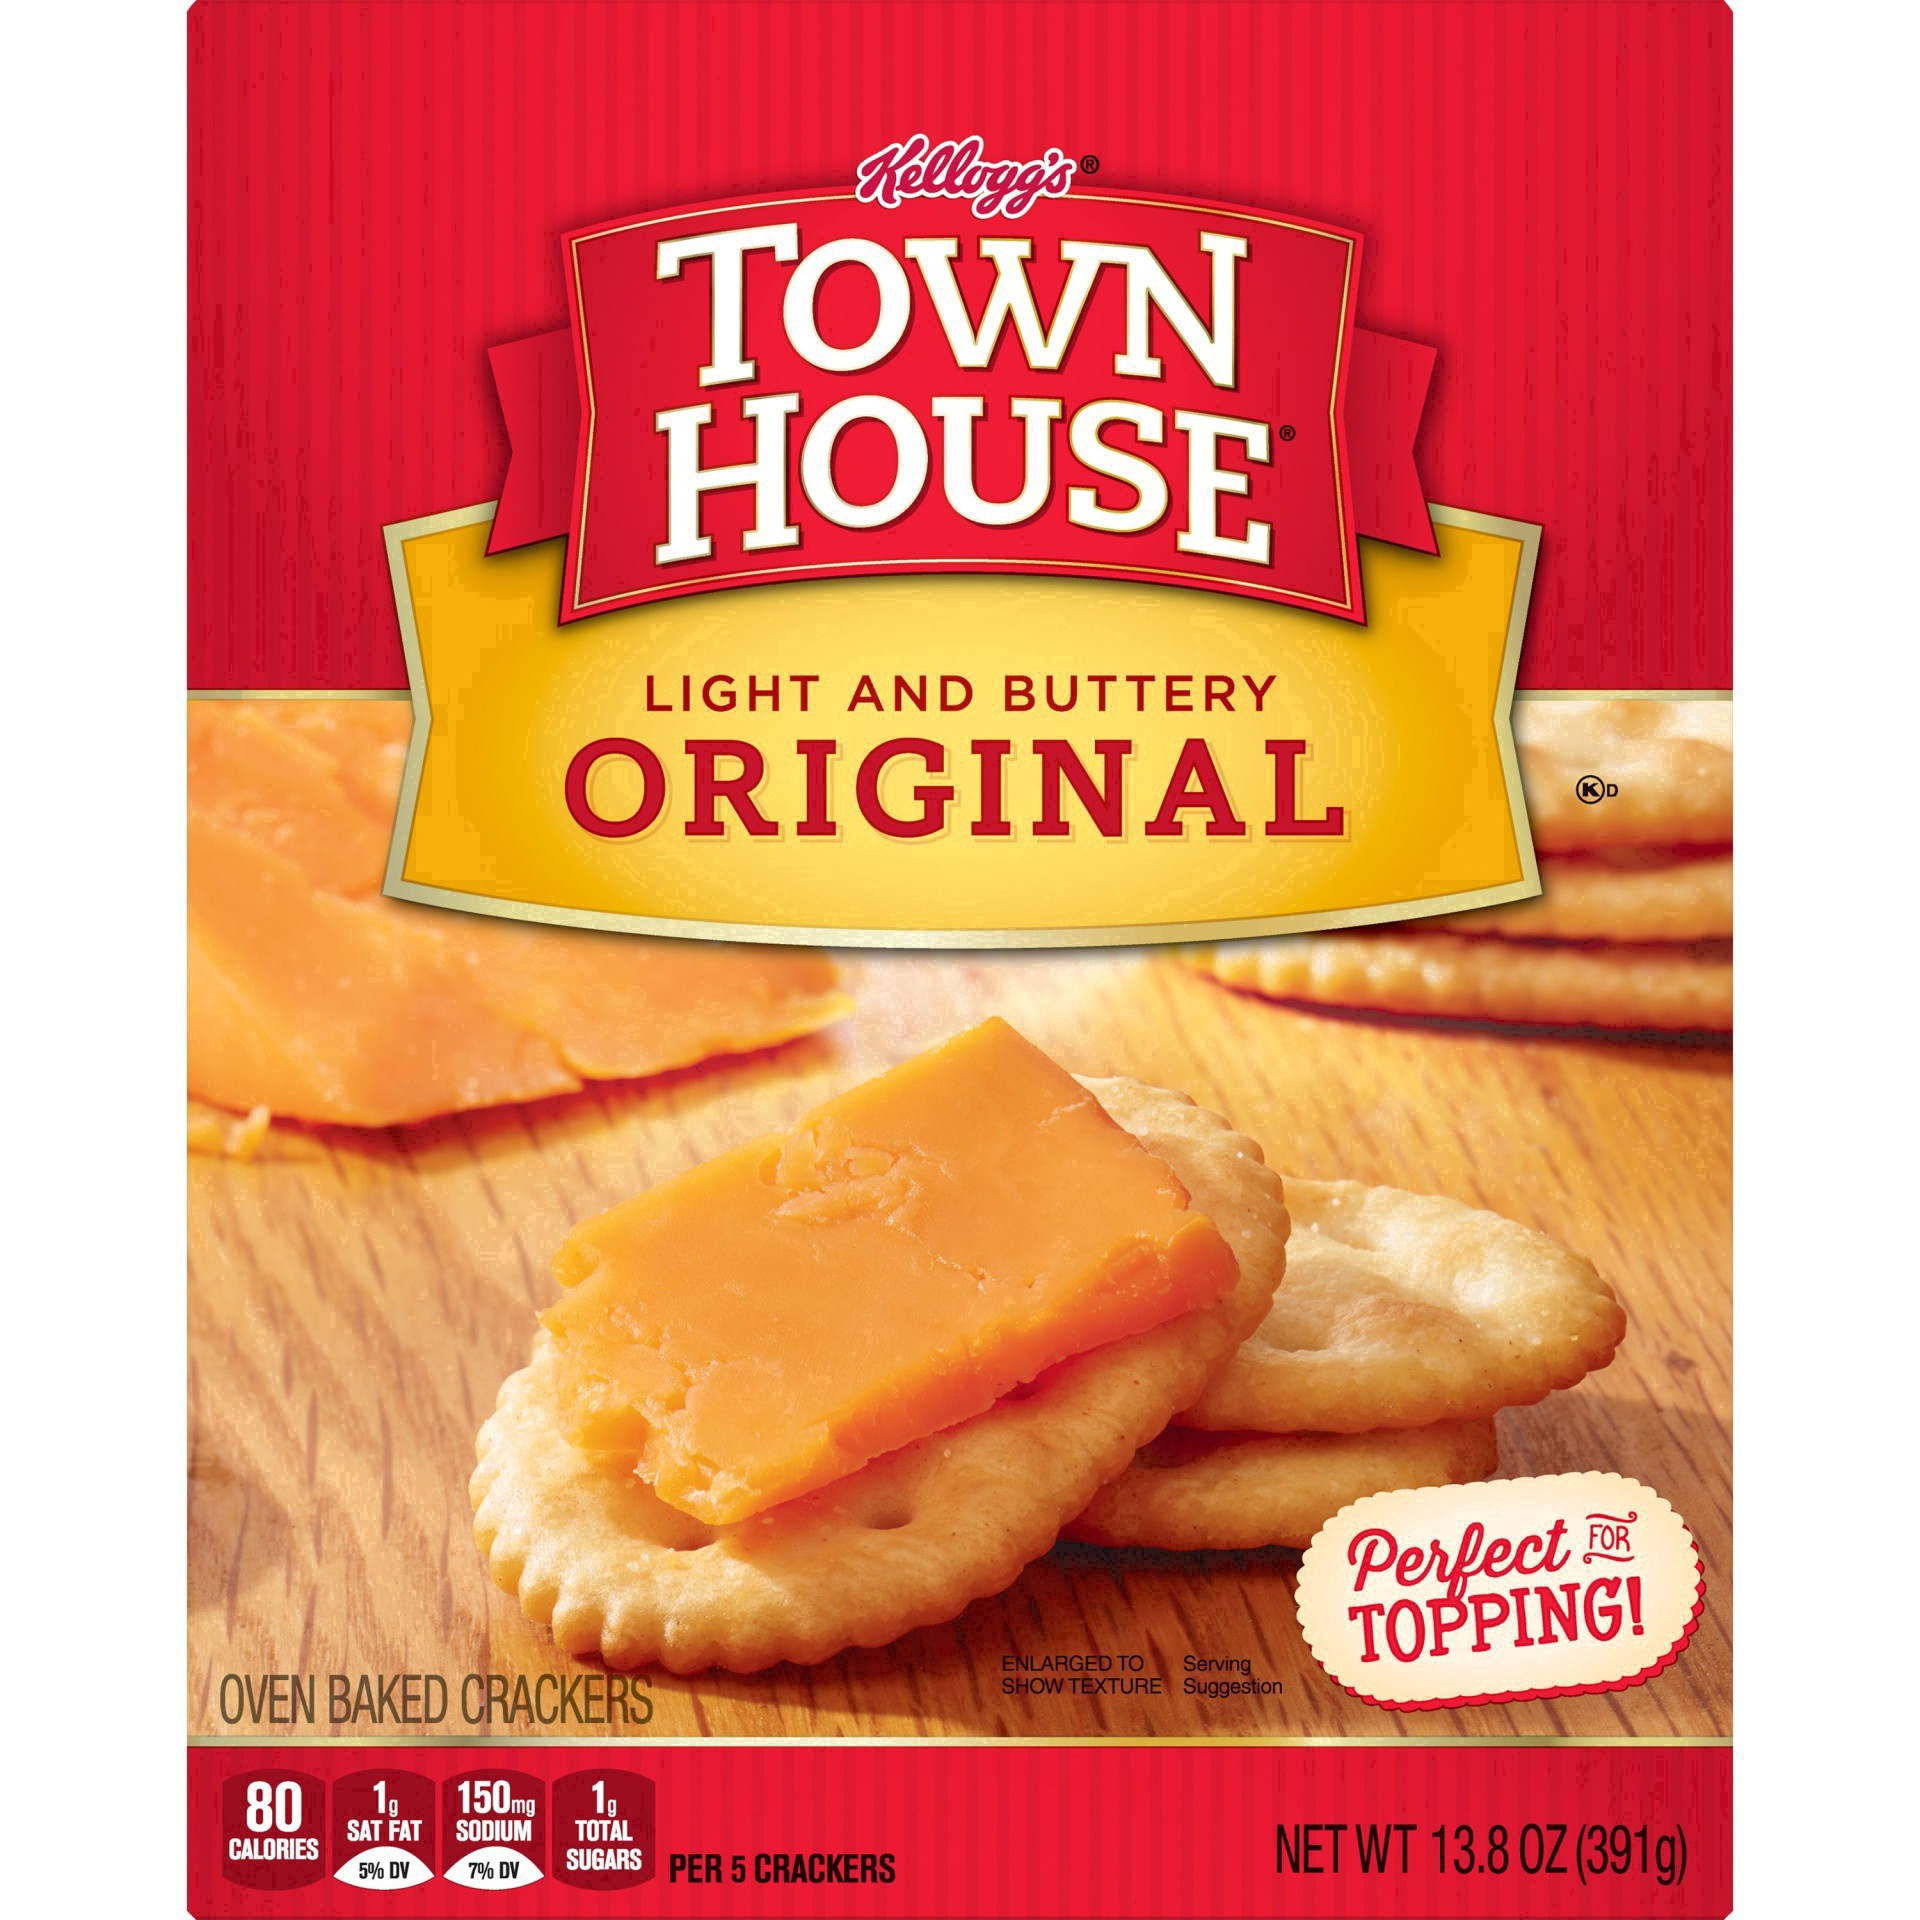 slide 57 of 101, Town House Kellogg's Town House Original Snack Crackers - 13.8oz, 13.8 oz